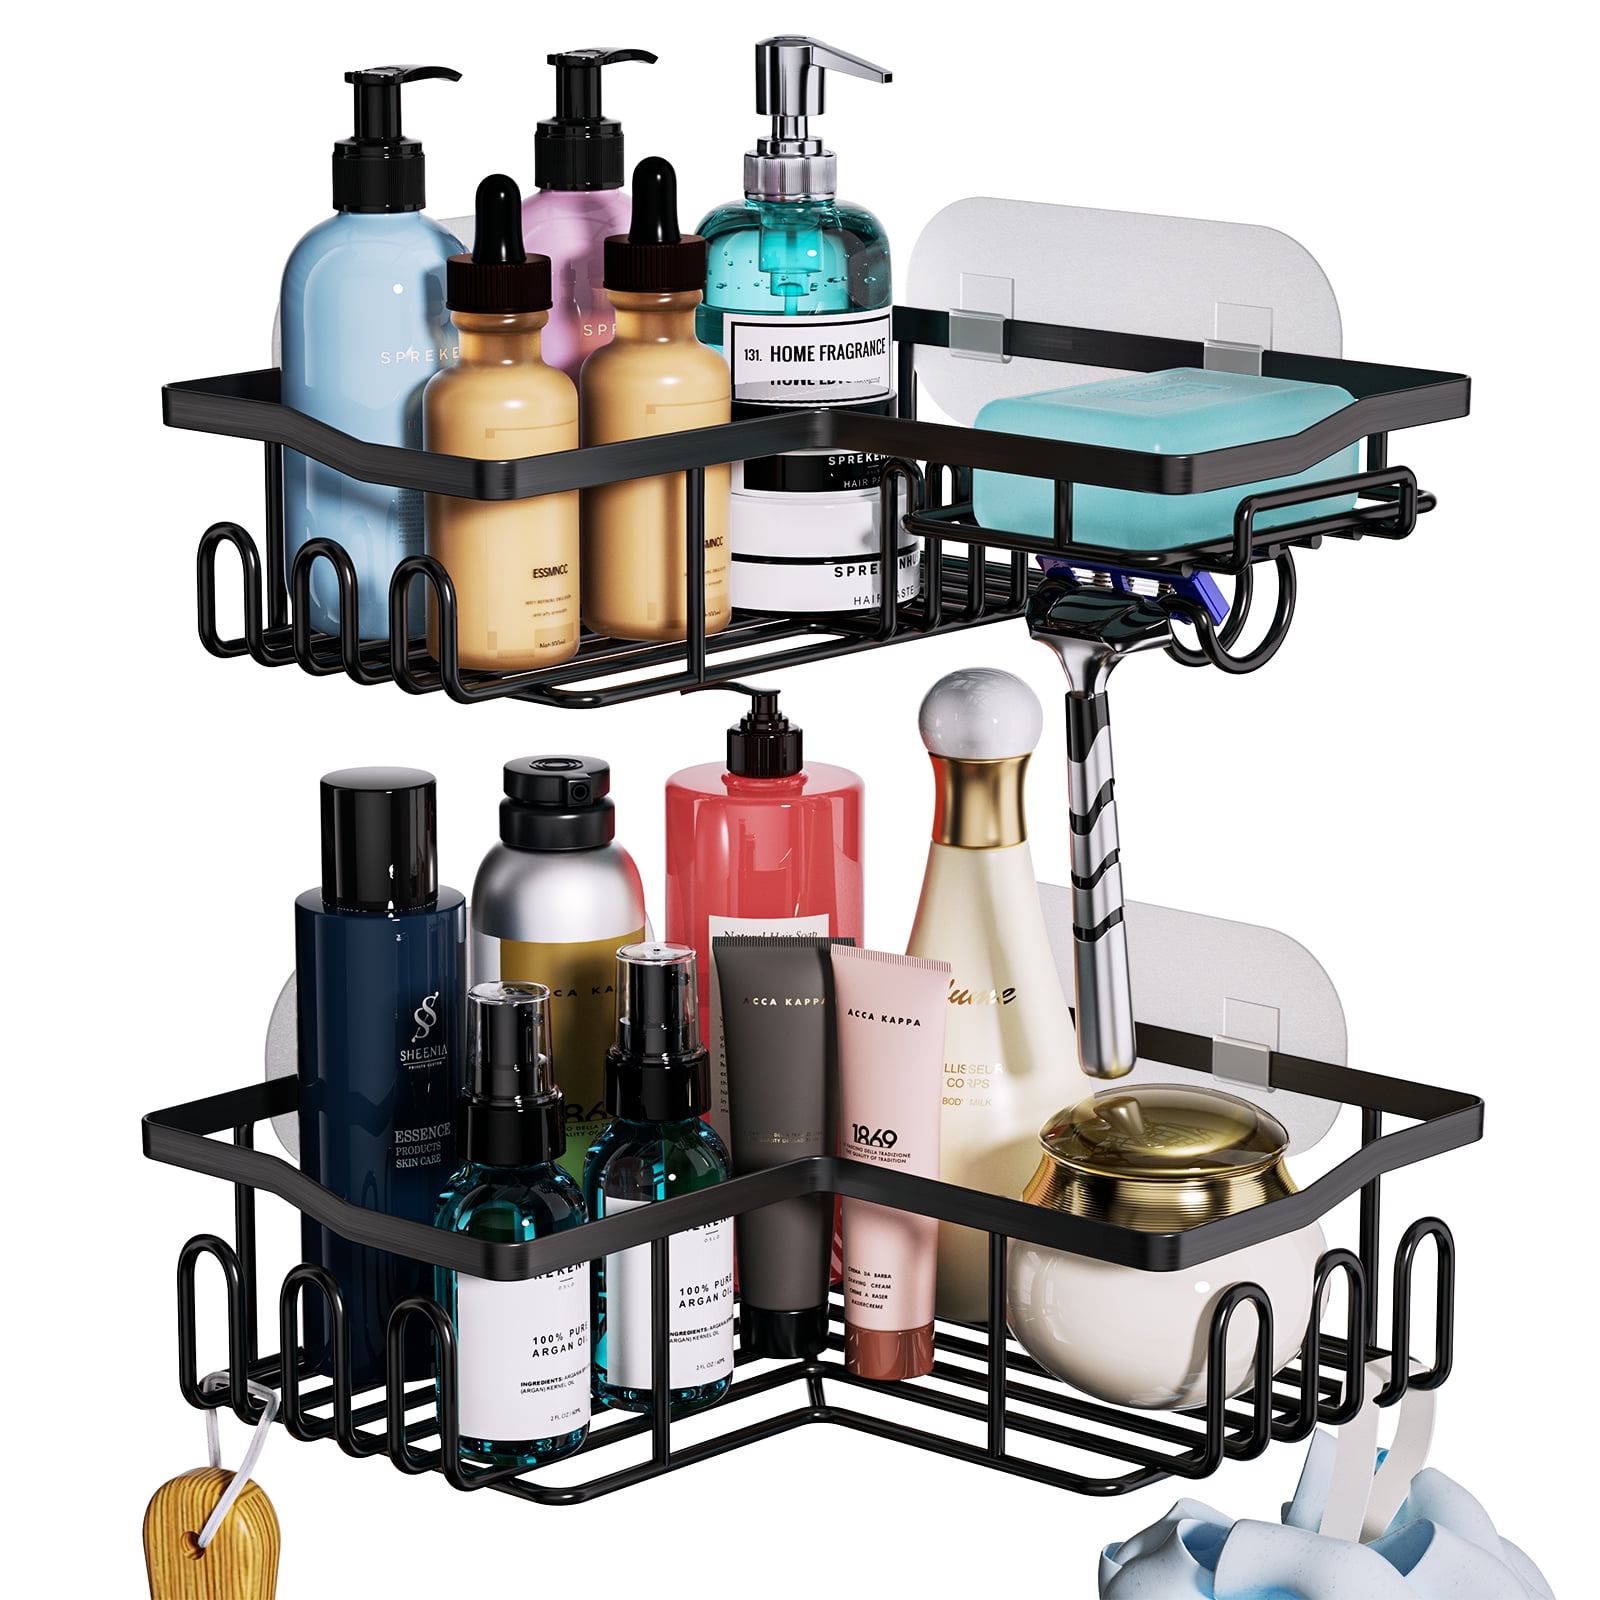 ODesign Adhesive 3 Pack Shower Caddy Basket Organizer with 4 Hooks Bathroom  Shower Shelf for Shampoo Lotion No Drilling Rustproof - Black